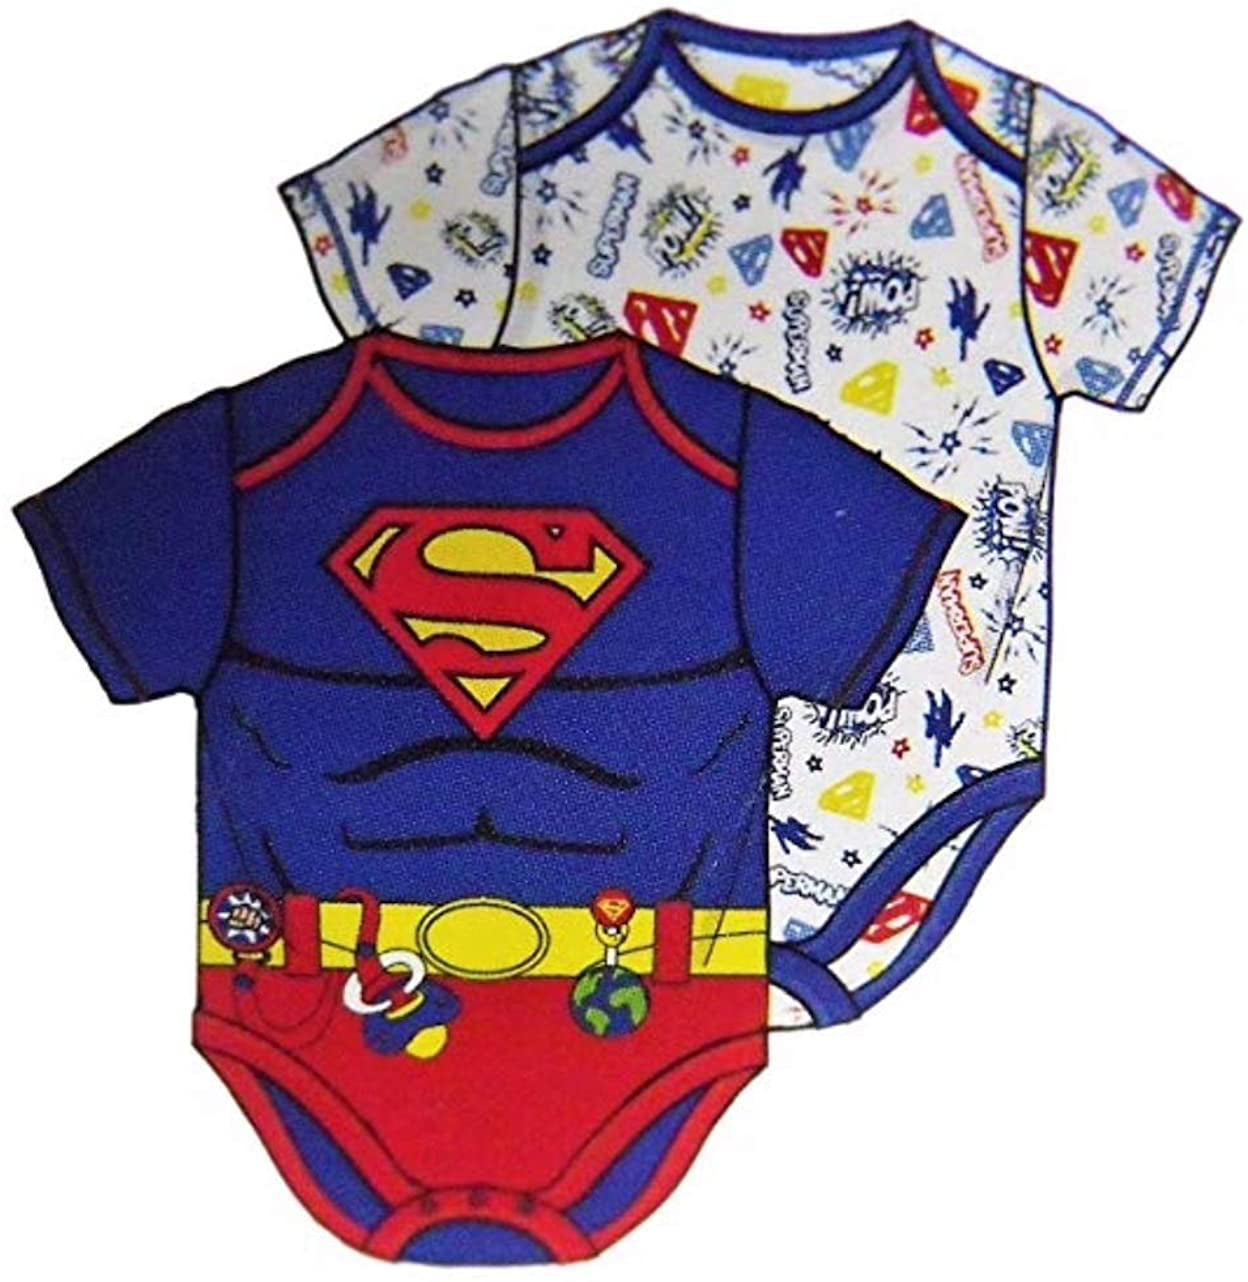 SUPERMAN DC Comics SUPERHERO Baby Infant Toddler ONE PIECE BODYSUIT 3 6 9 Months 